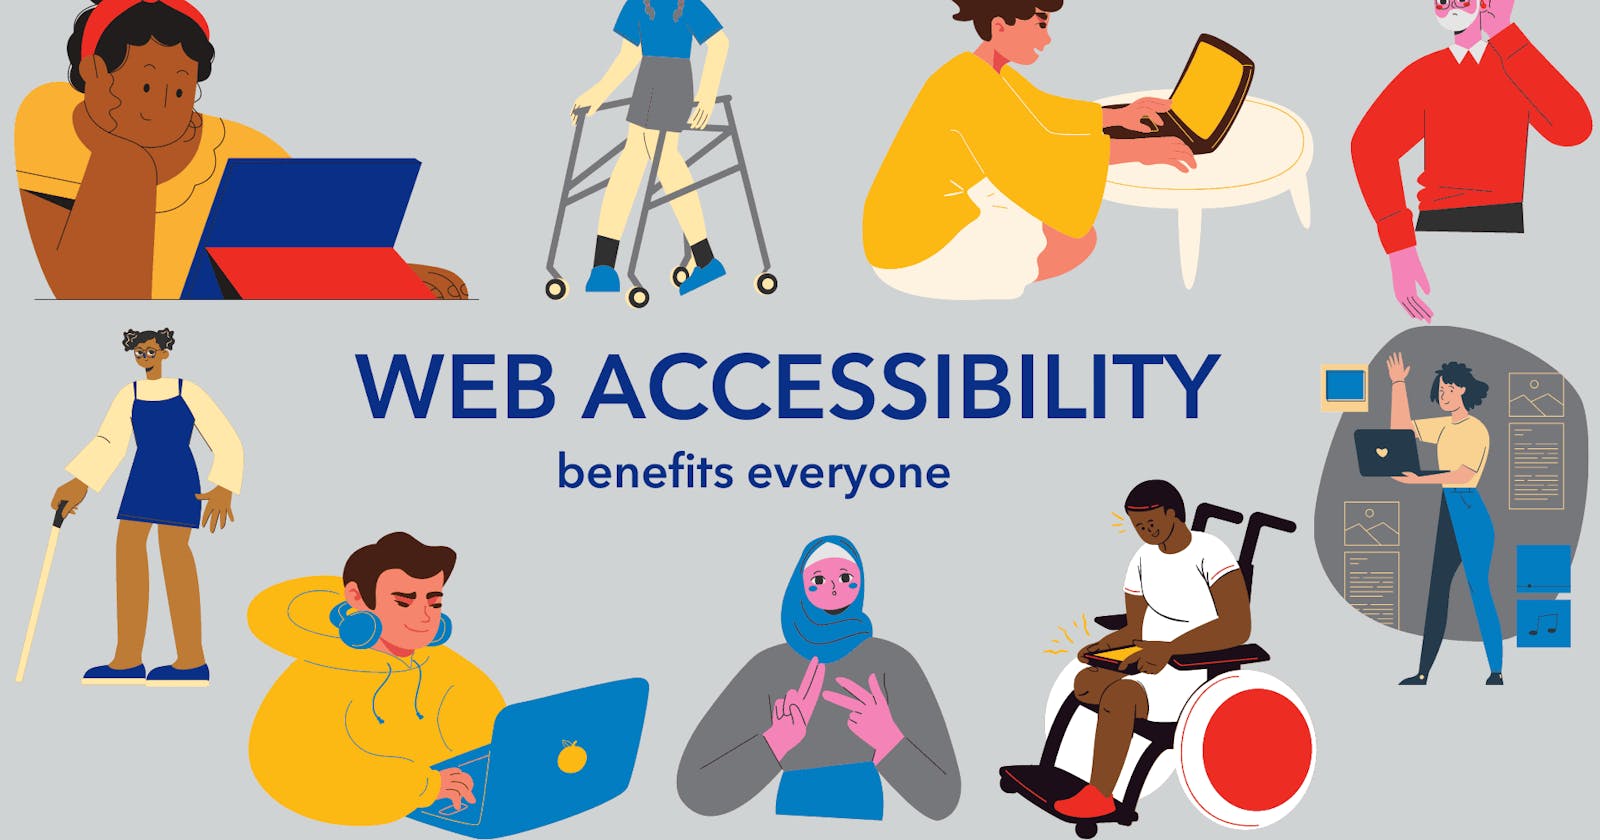 "Accessibility in Web Development"